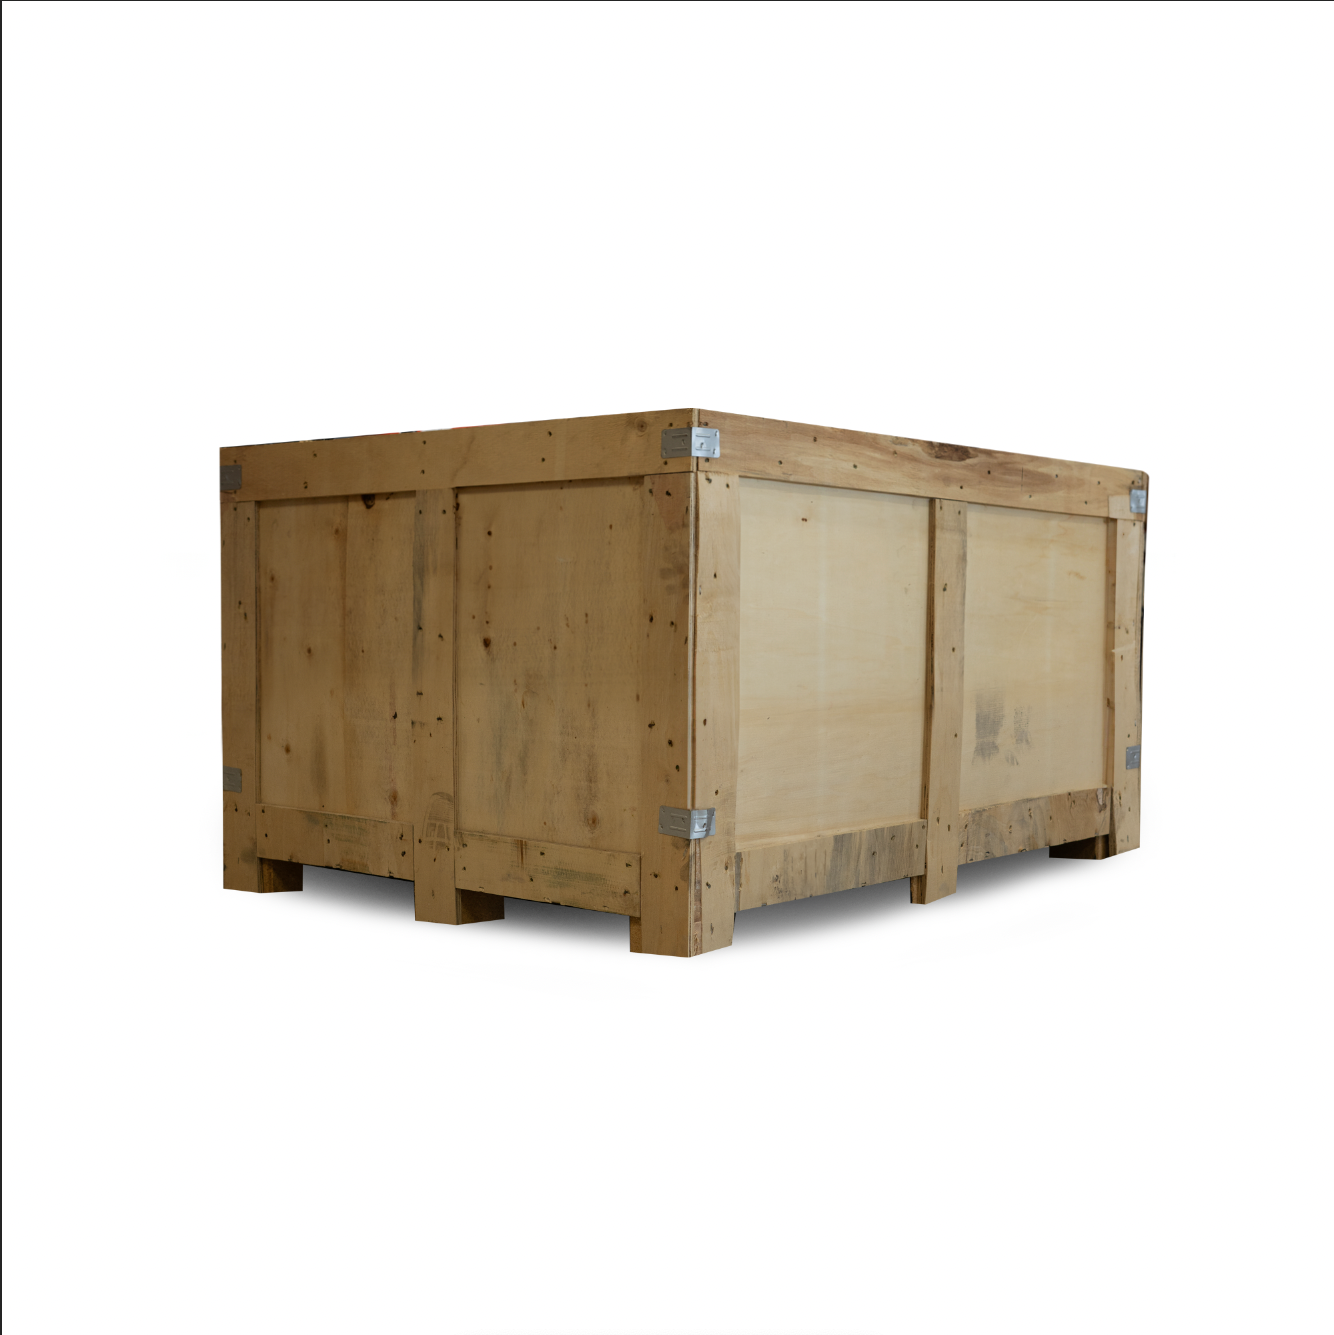 Trailer Tandem Slipper Suspension / Hanger Kit for 10000 lb axles - In Bulk (25pc) or Crate (42pc)